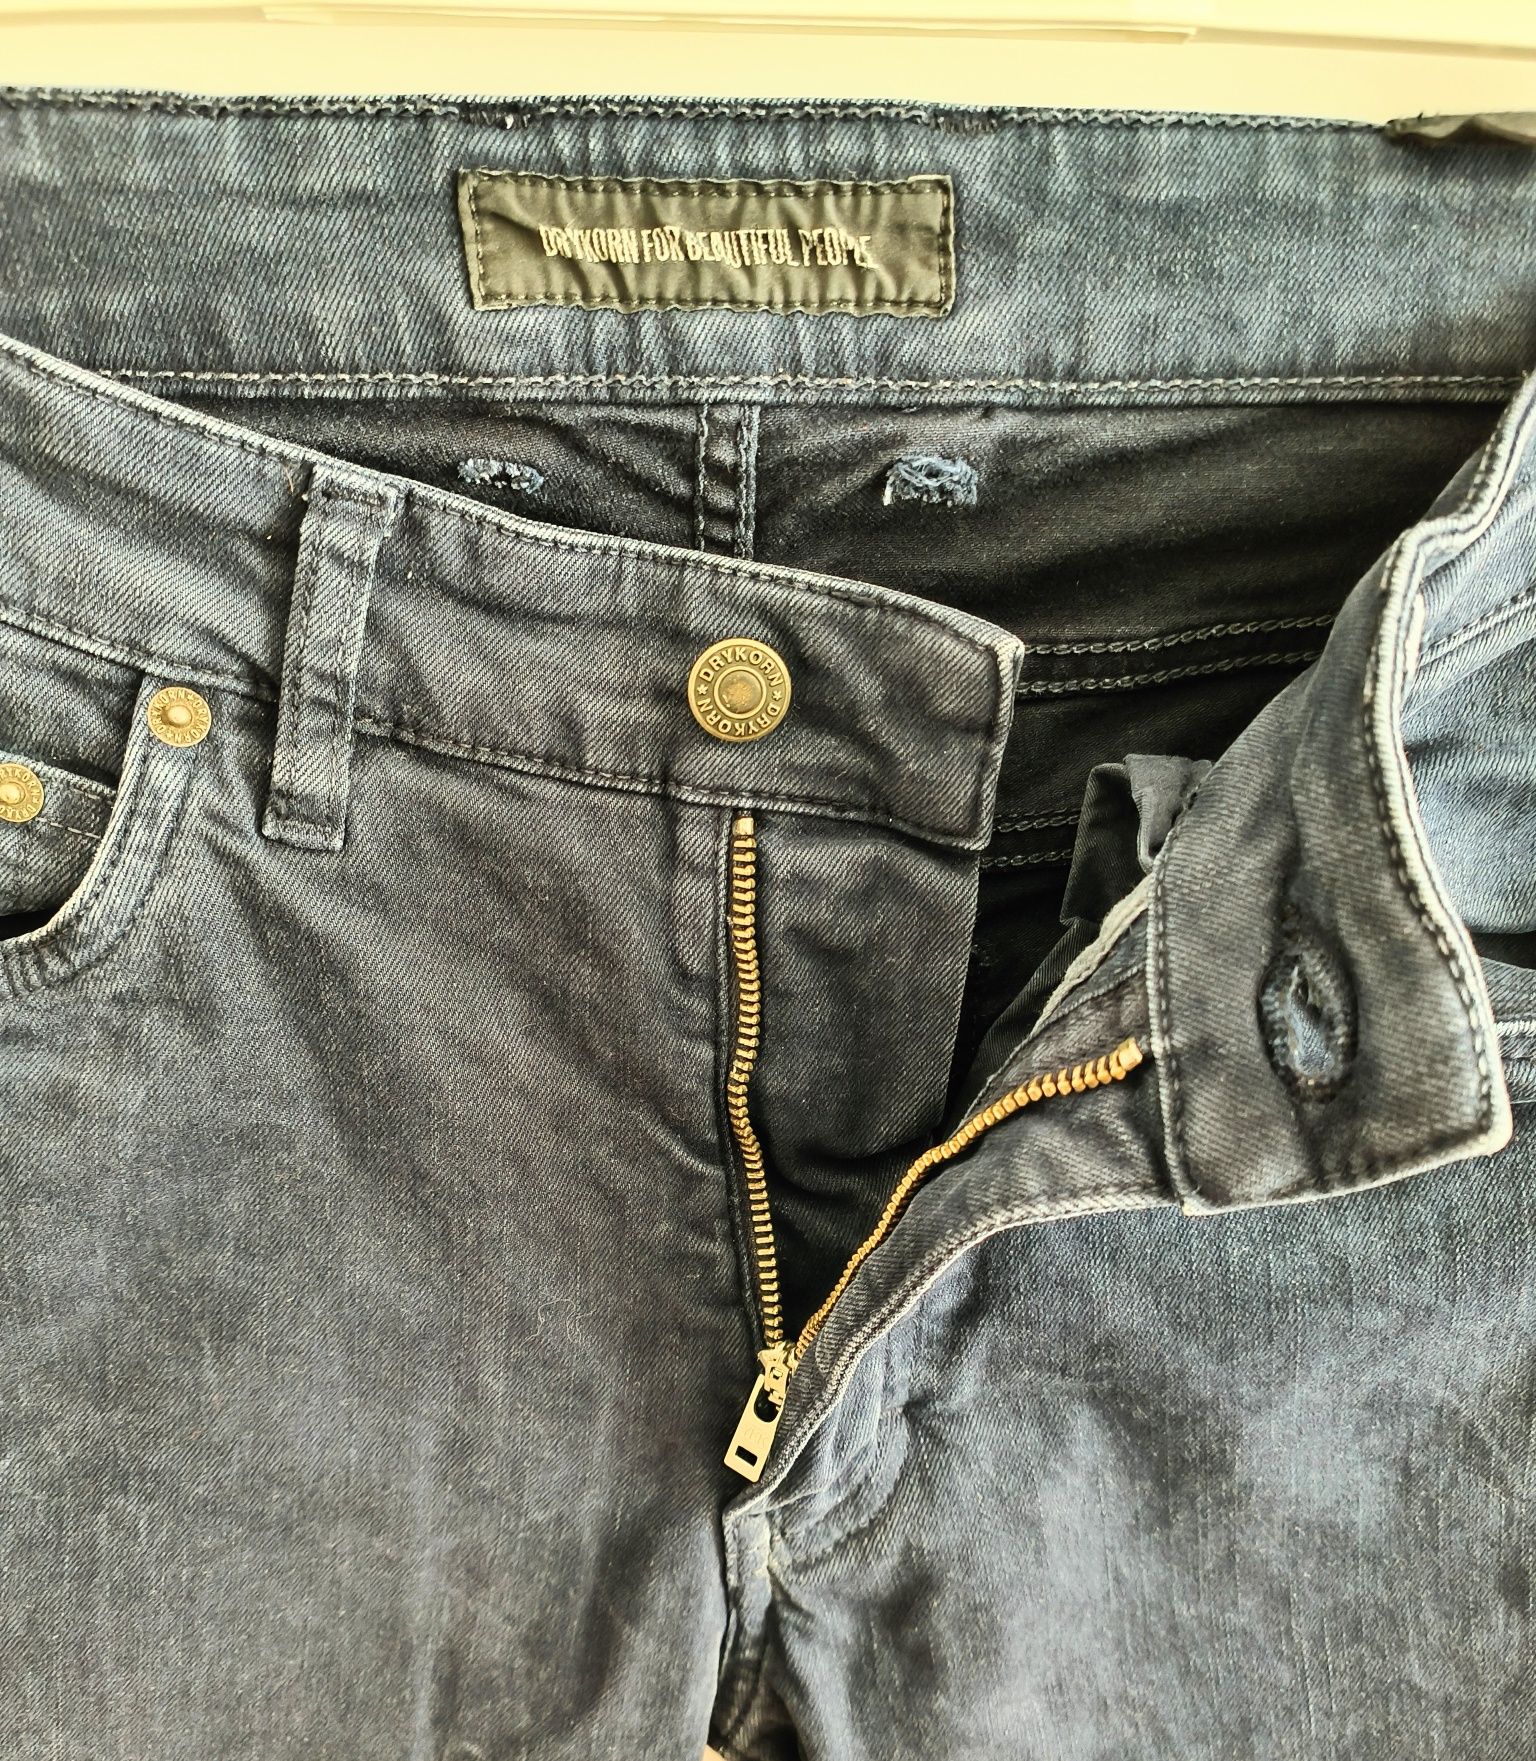 Męskie jeansy Drykorn For Beautiful People Slim Fit W32 L34